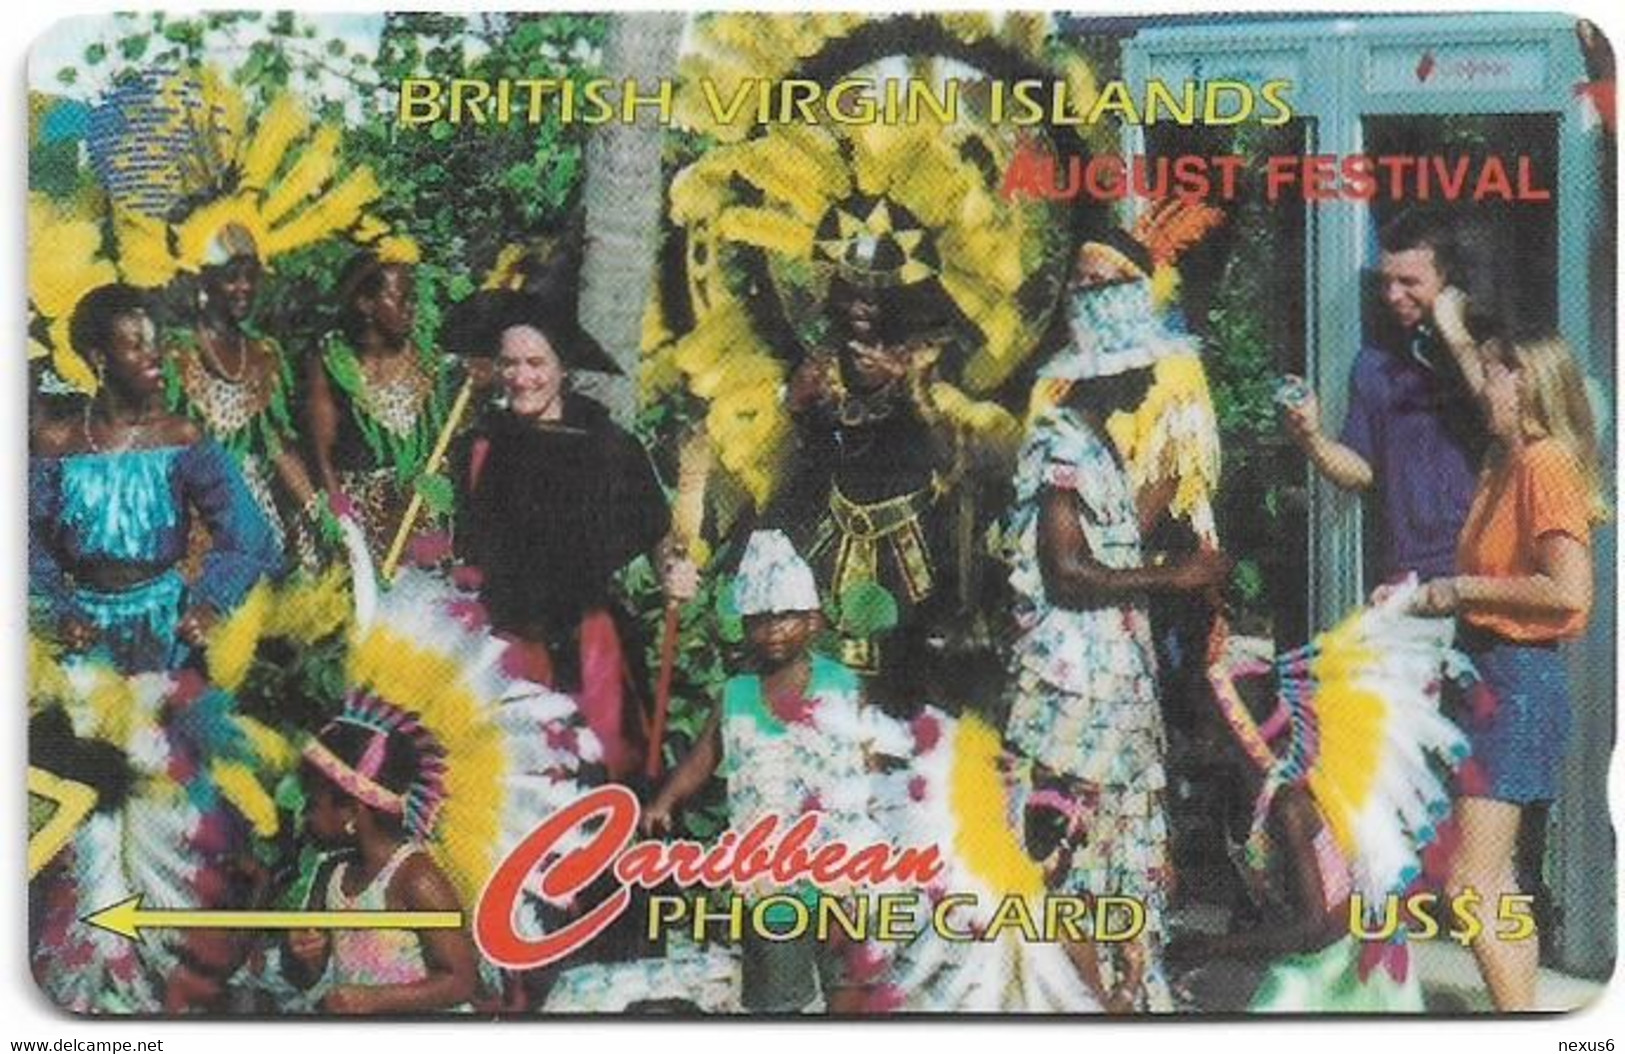 British Virgin Islands - C&W (GPT) - August Festival, 143CBVF, 1997, 17.000ex, Used - Vierges (îles)